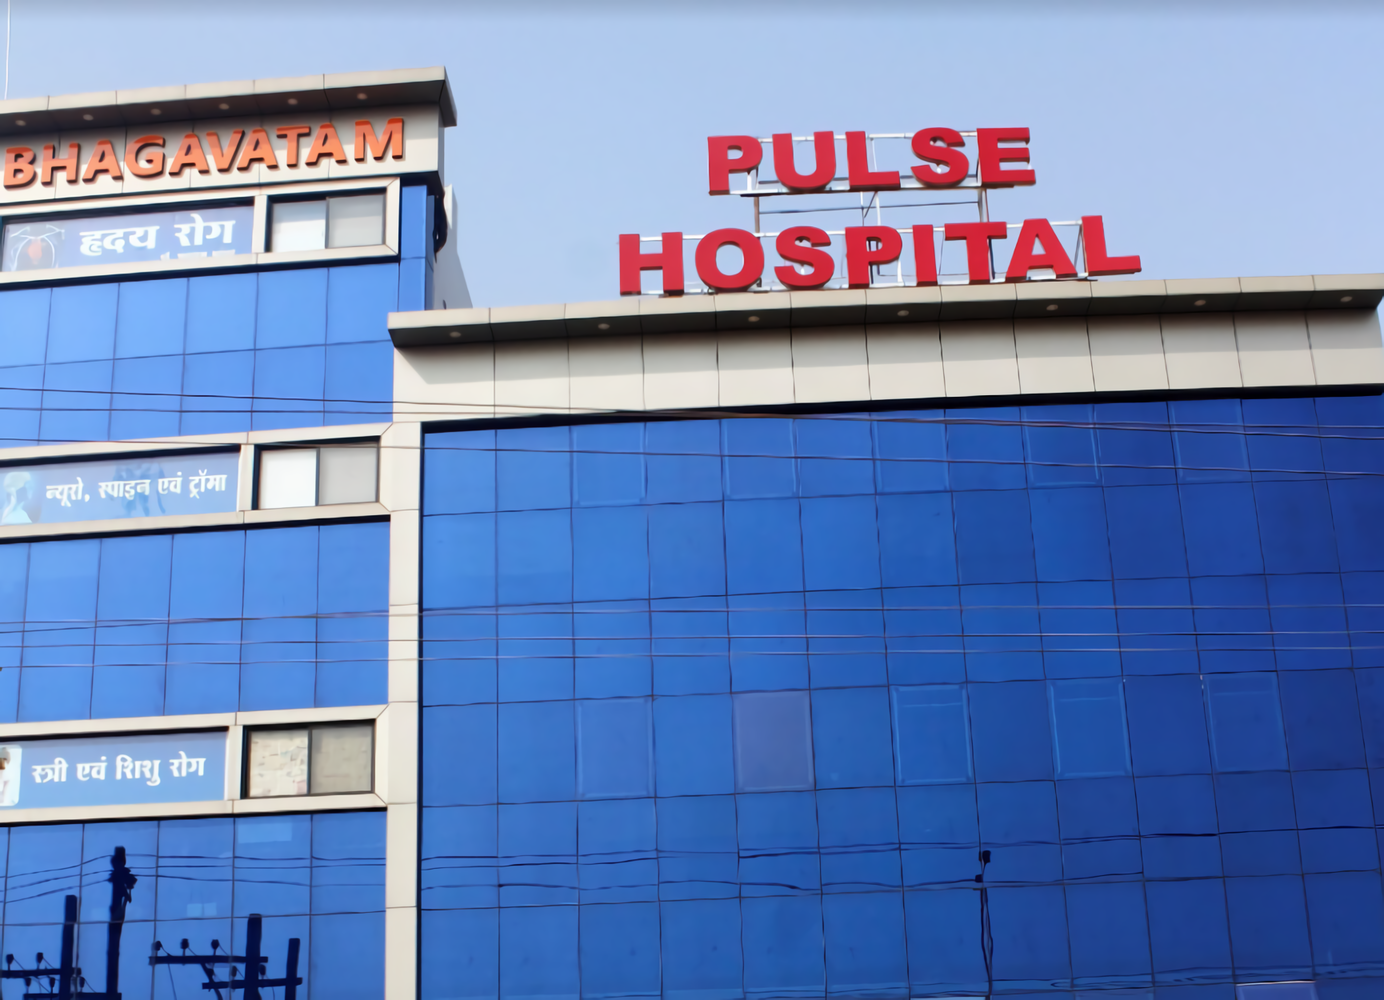 Pulse Hospital